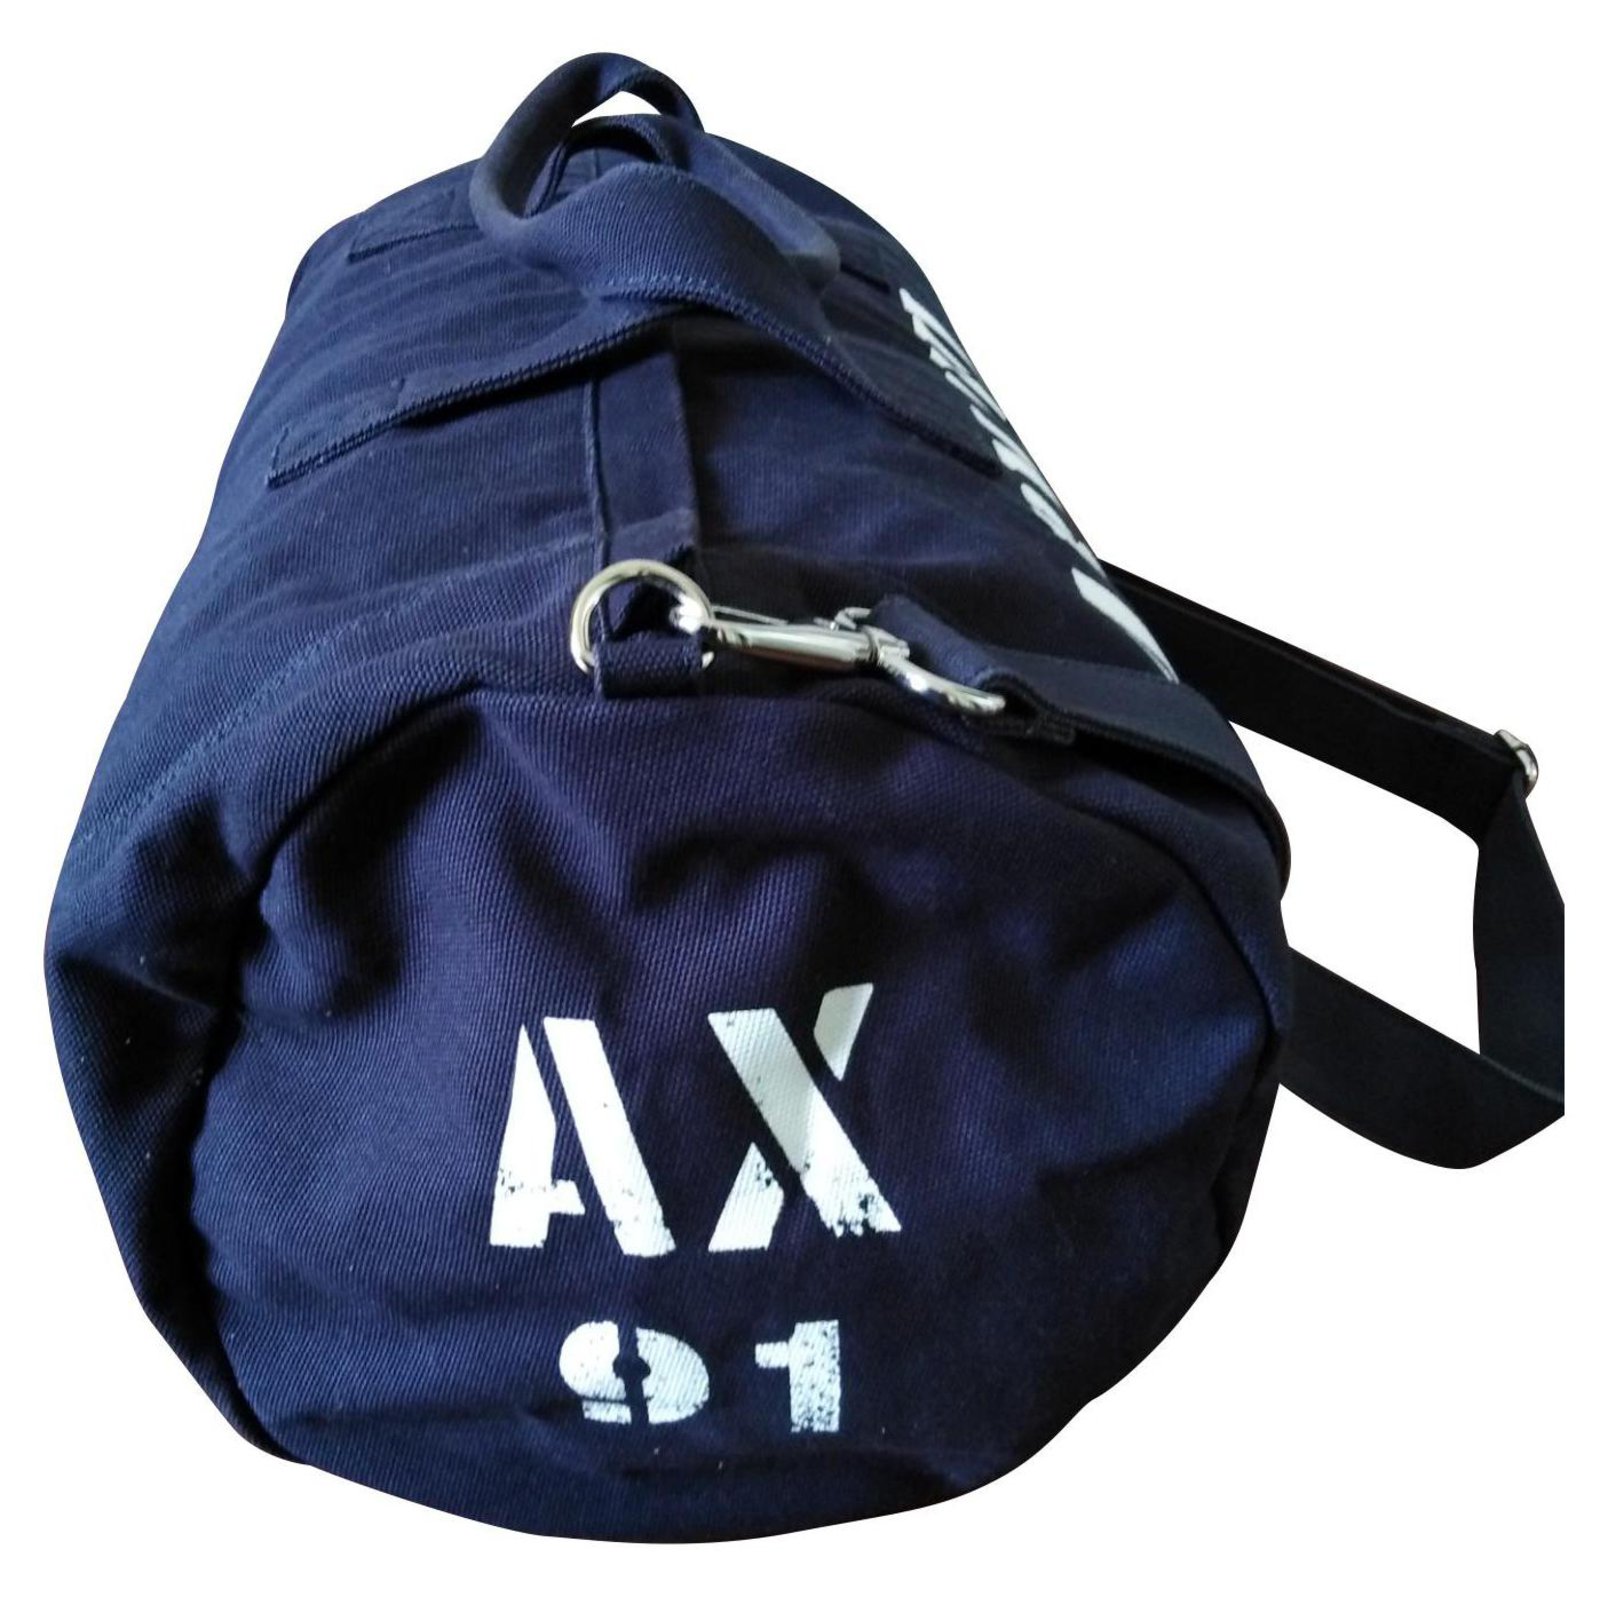 armani exchange travel bag